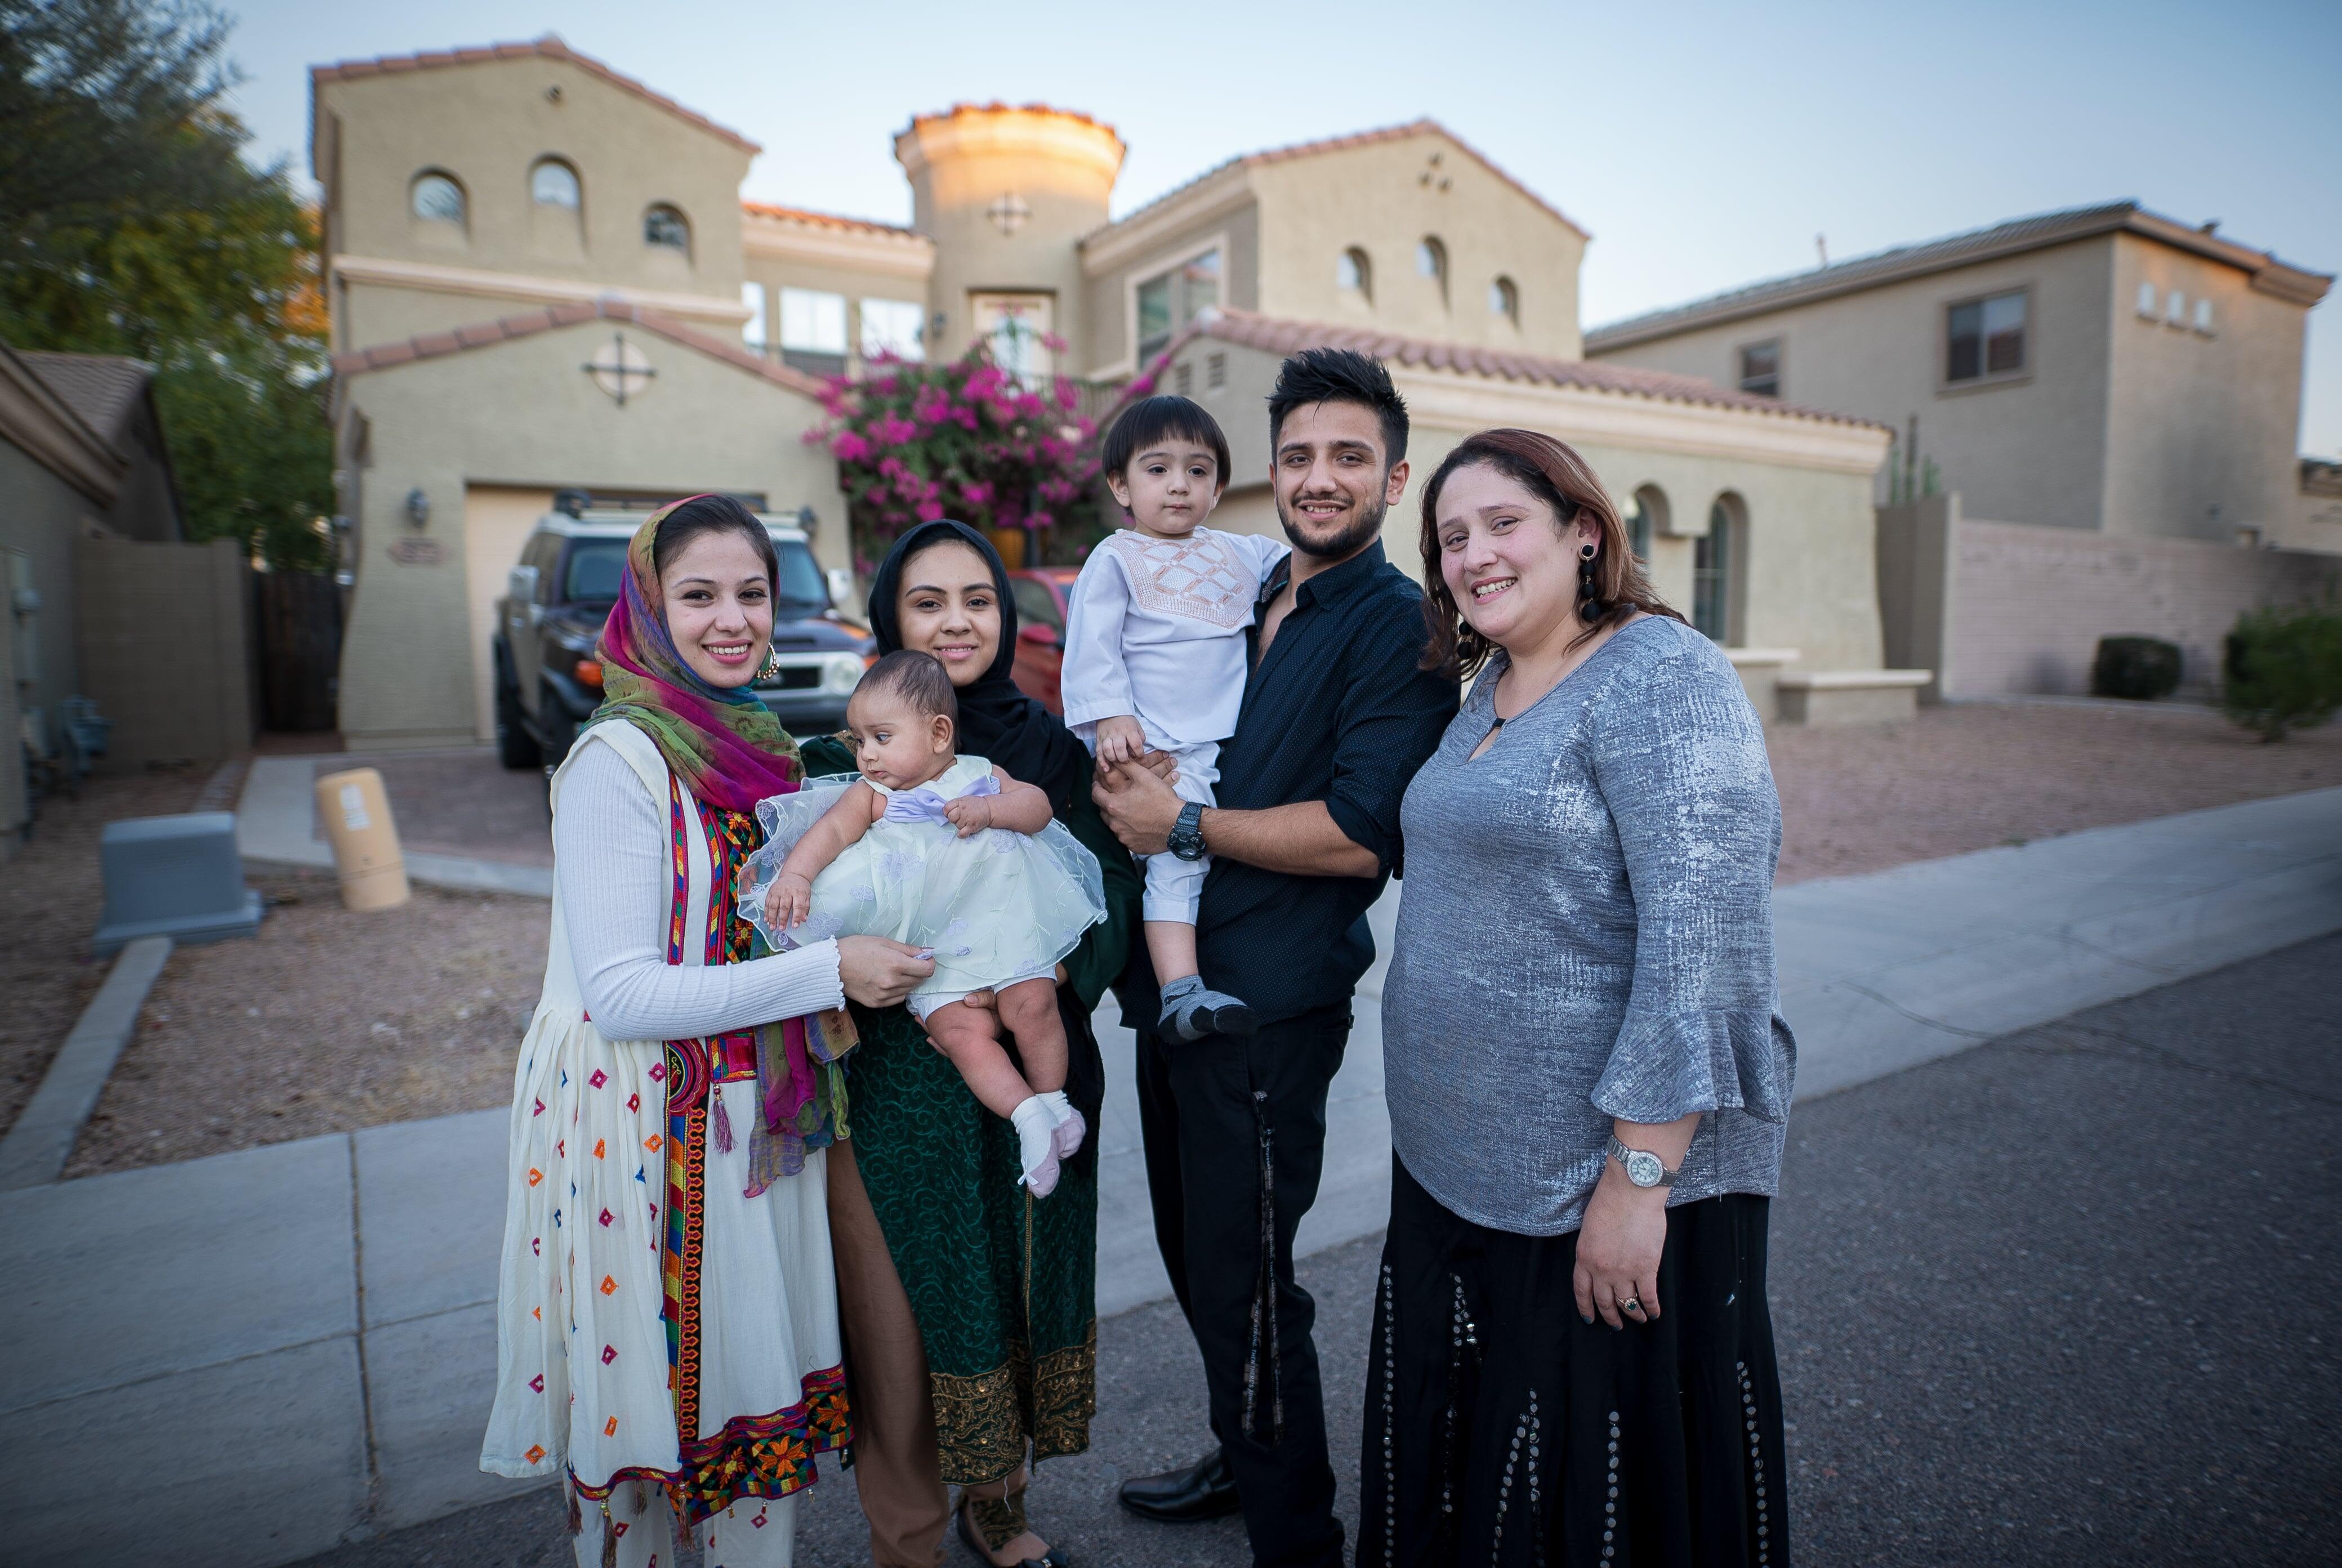 Muska Haseeb, left, with her family in Phoenix, Arizona